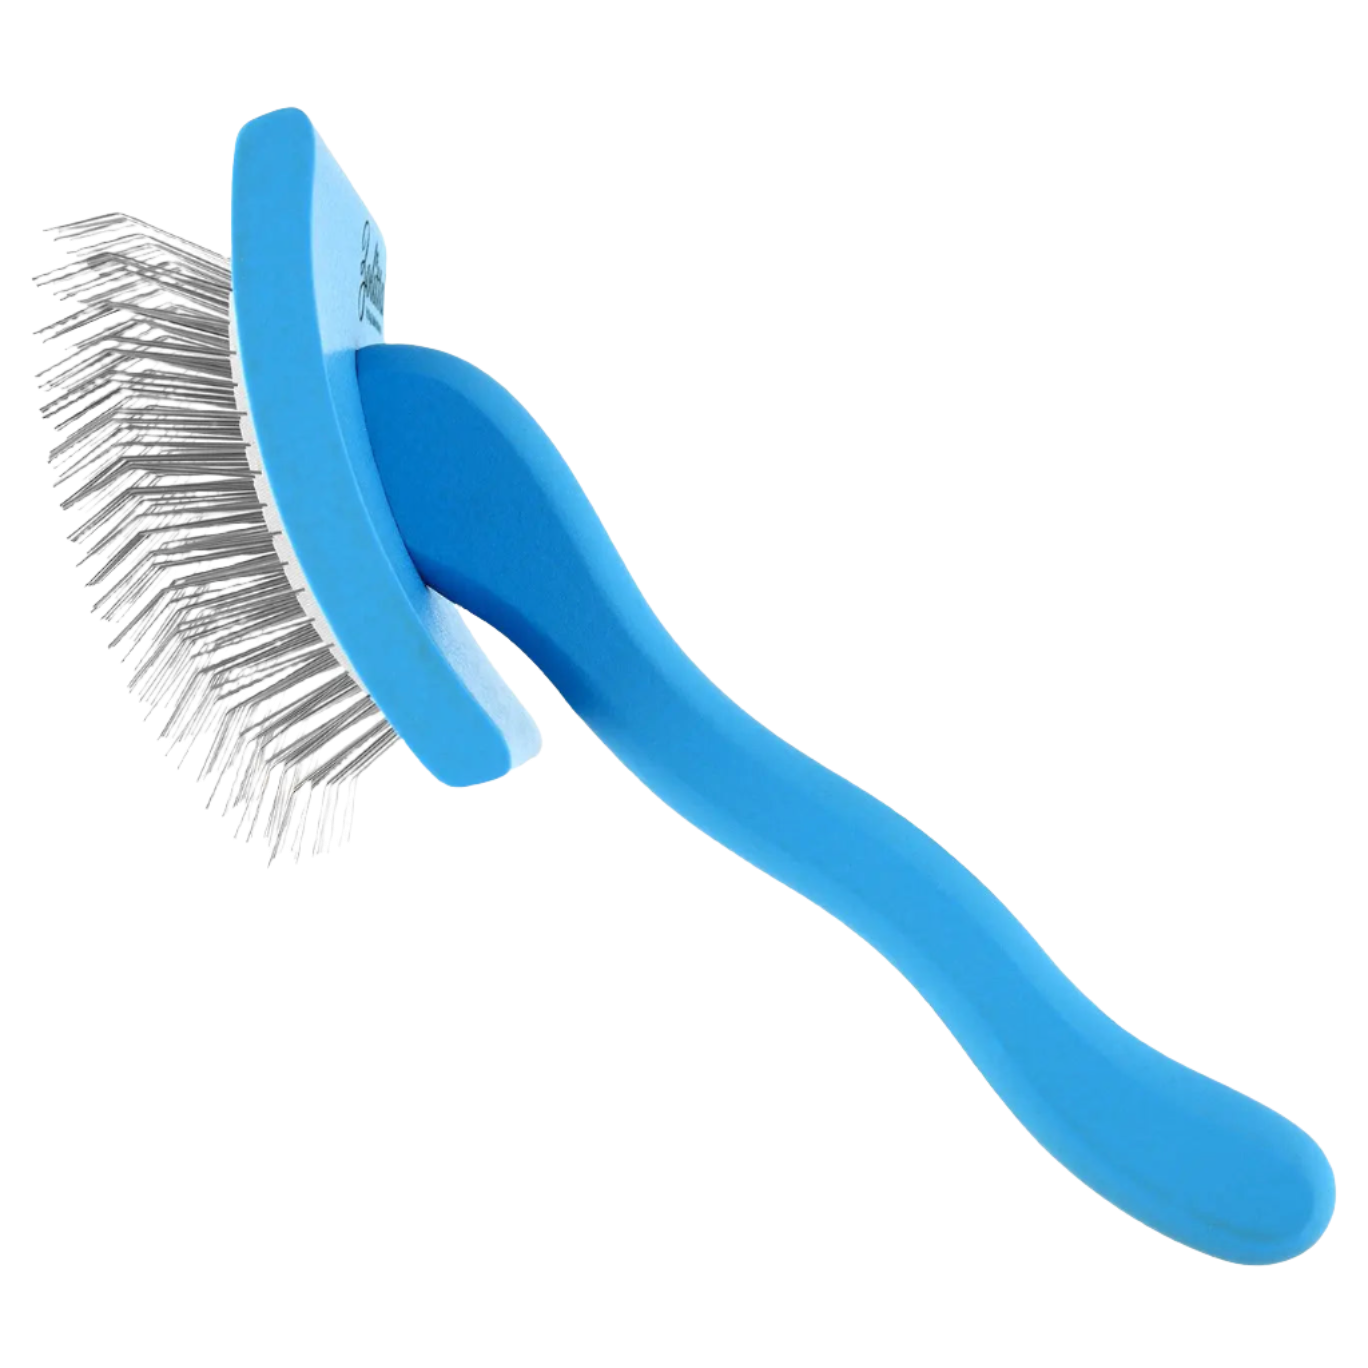 Large Blue Dematting Brush by Zolitta